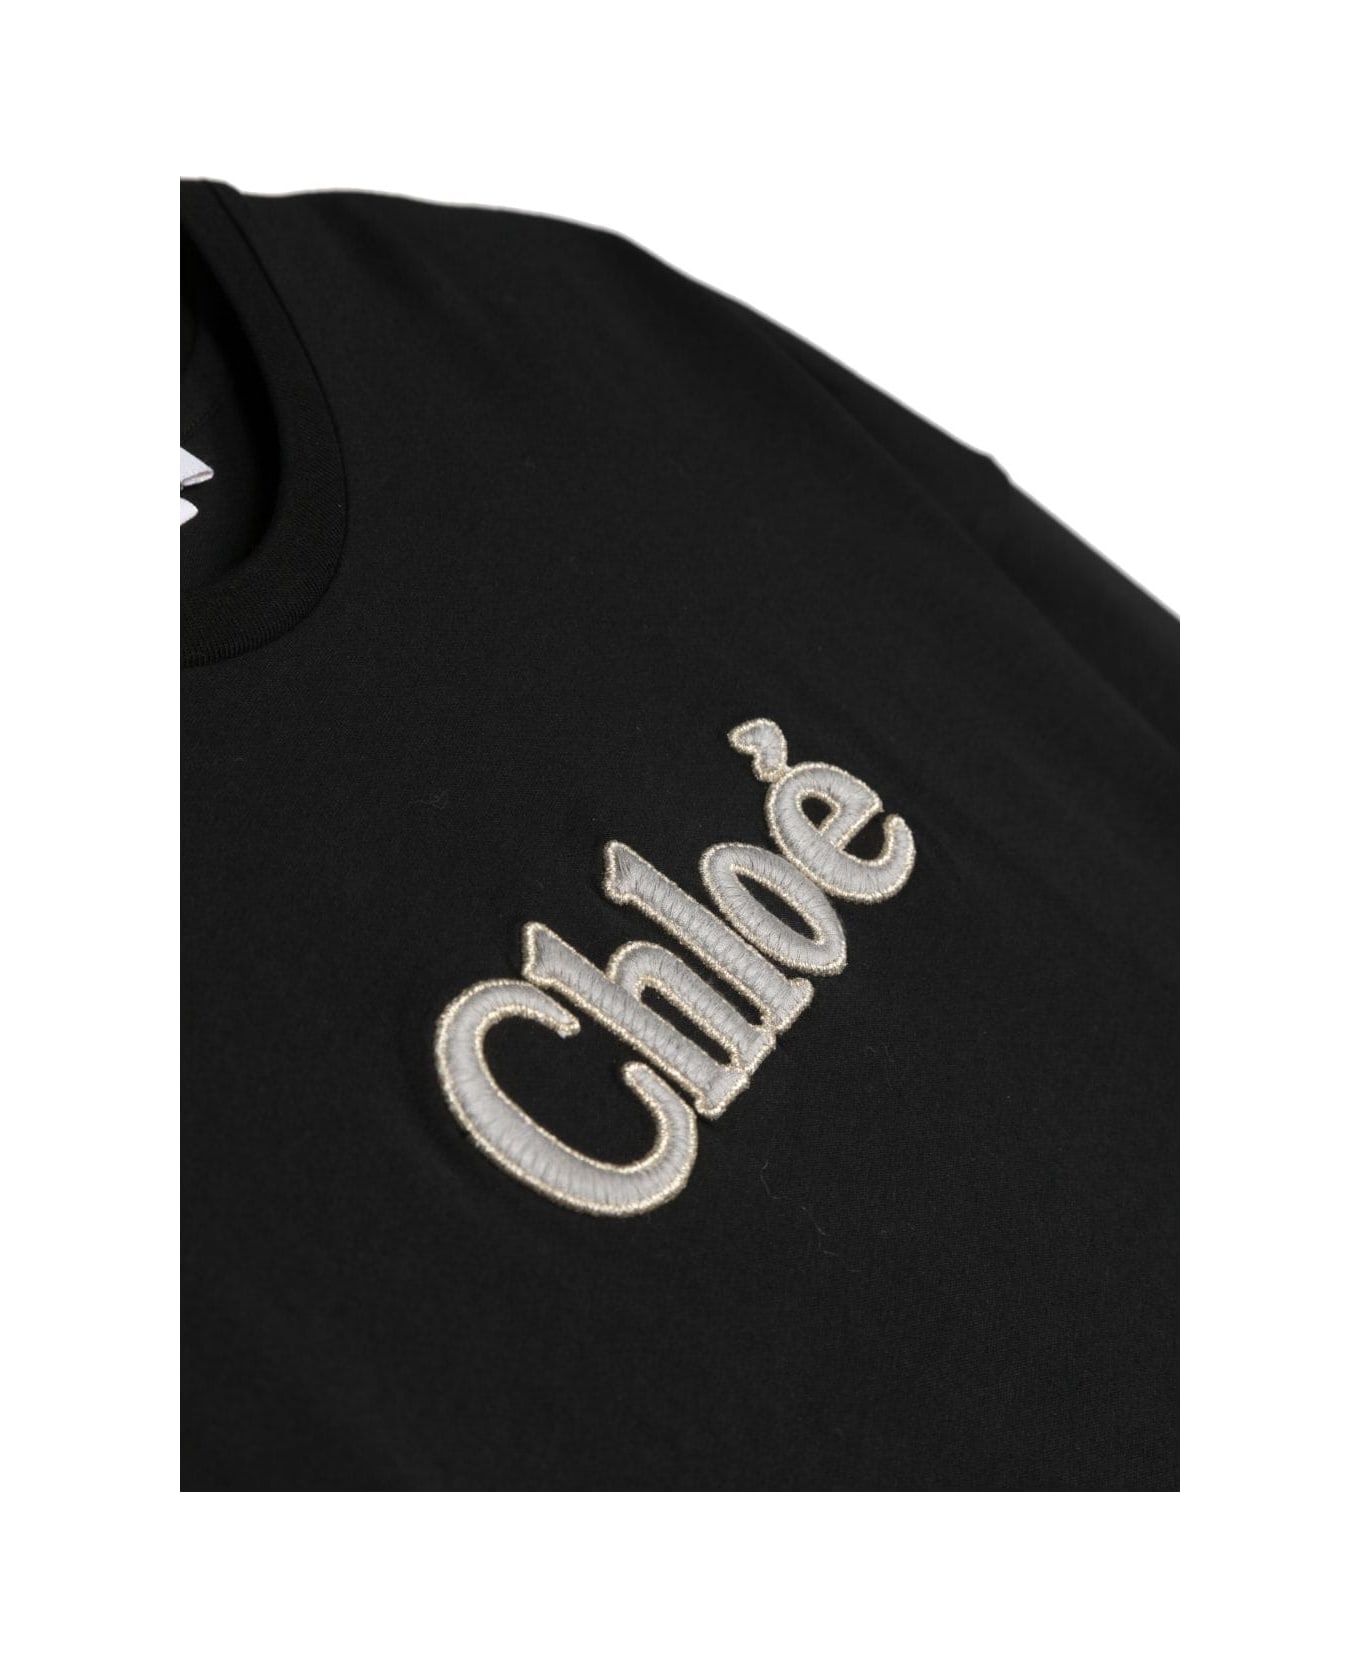 Chloé Chloe T-shirt Nera In Jersey Di Cotone Bambina - Nero